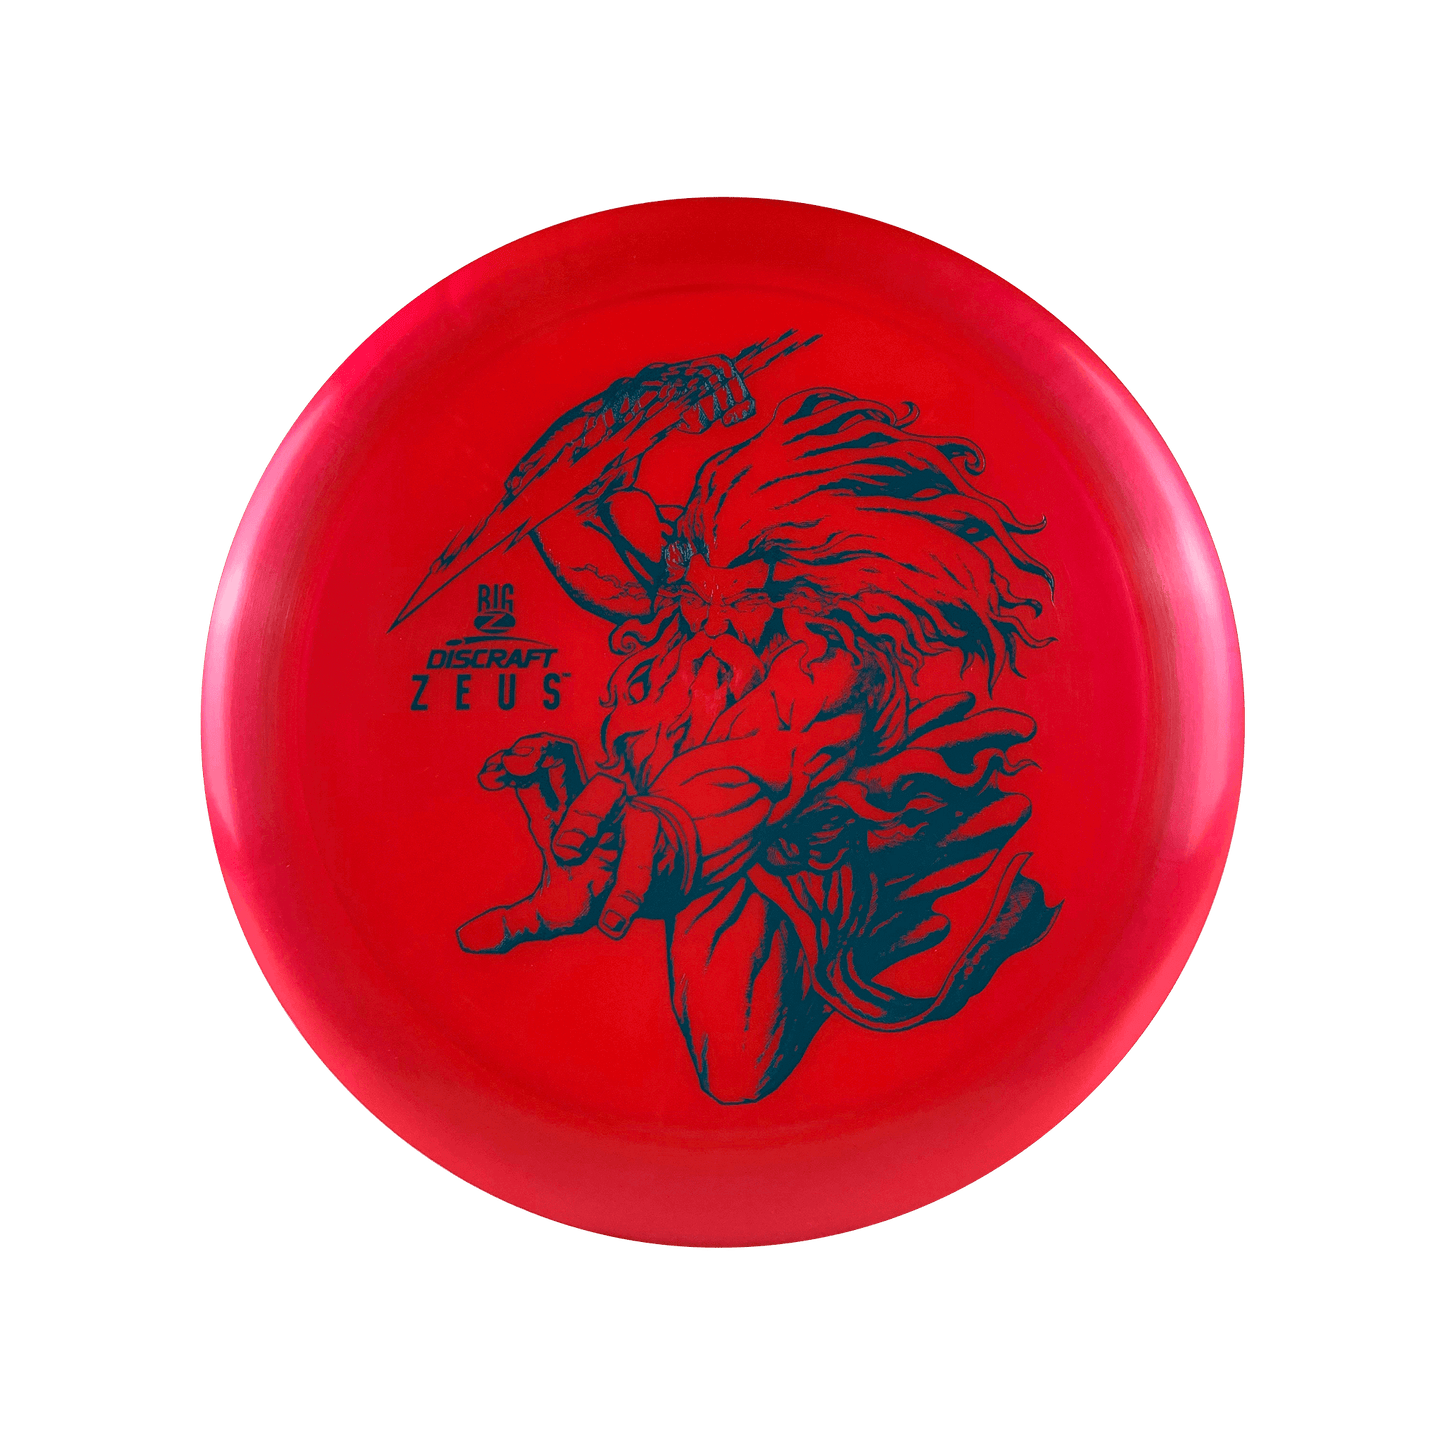 Big Z Zeus Disc Discraft red 173 